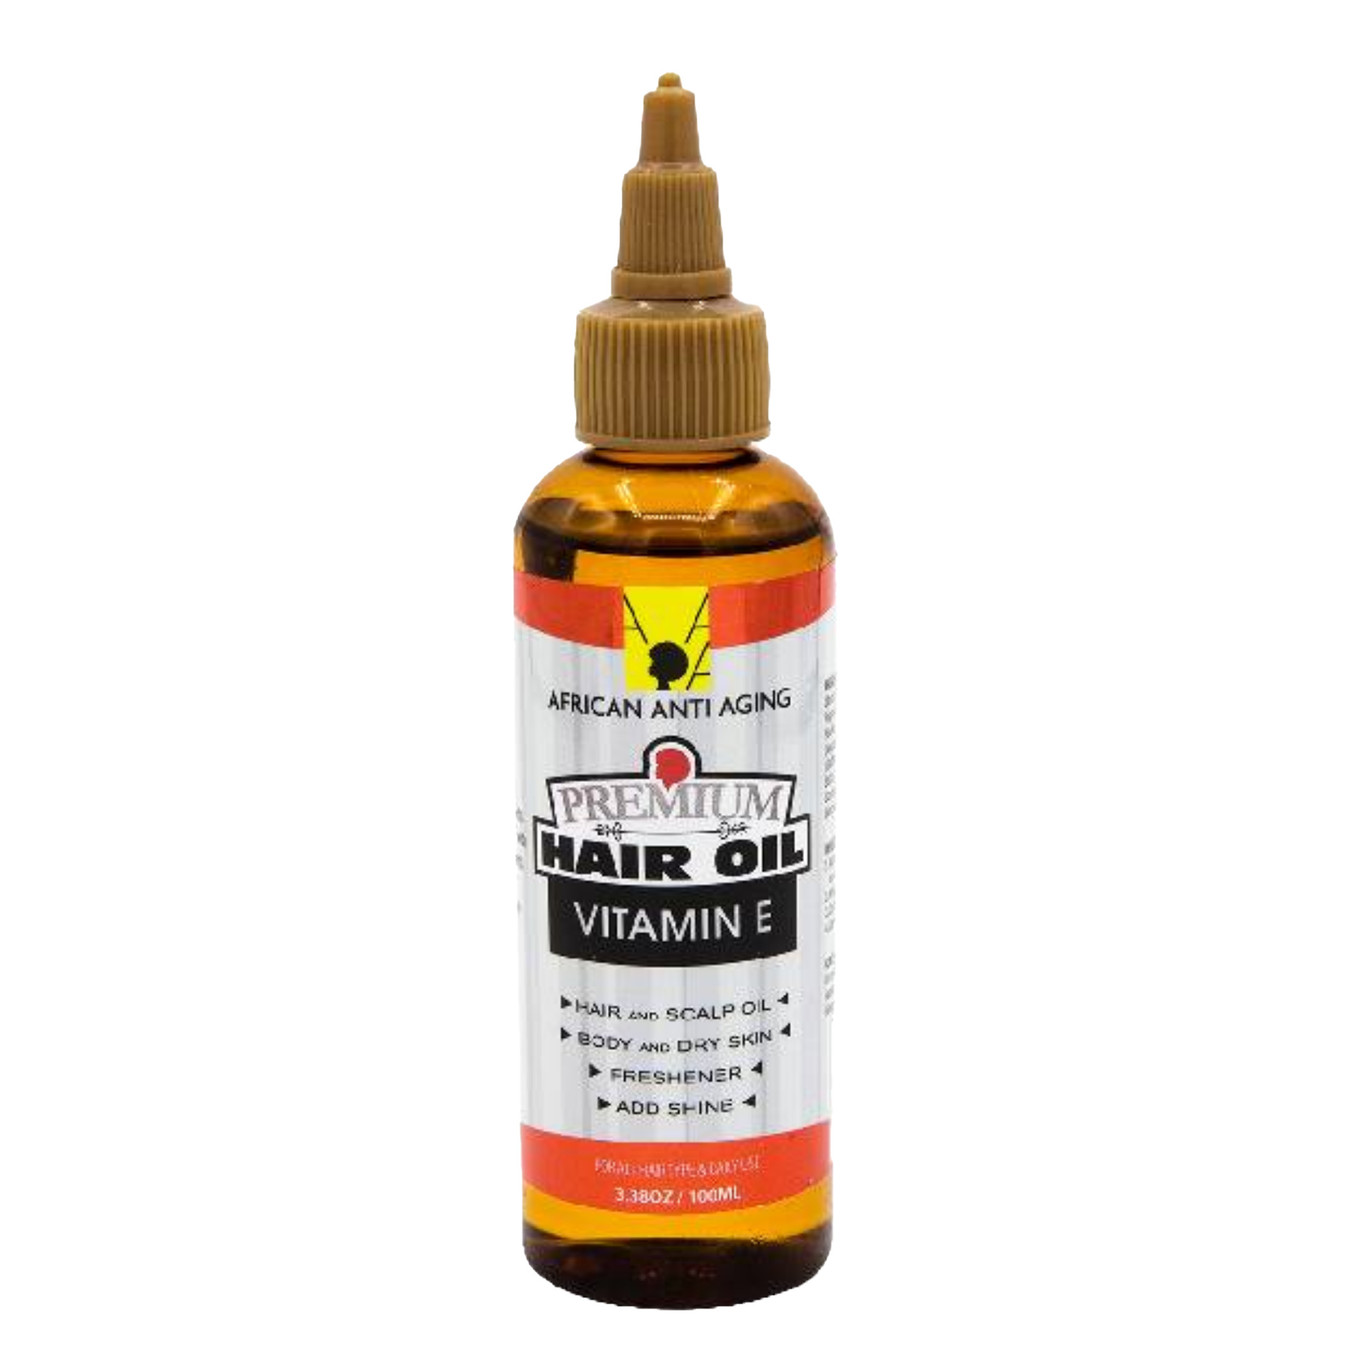 African Anti Aging  Premium Hair Oil - Vitamin E